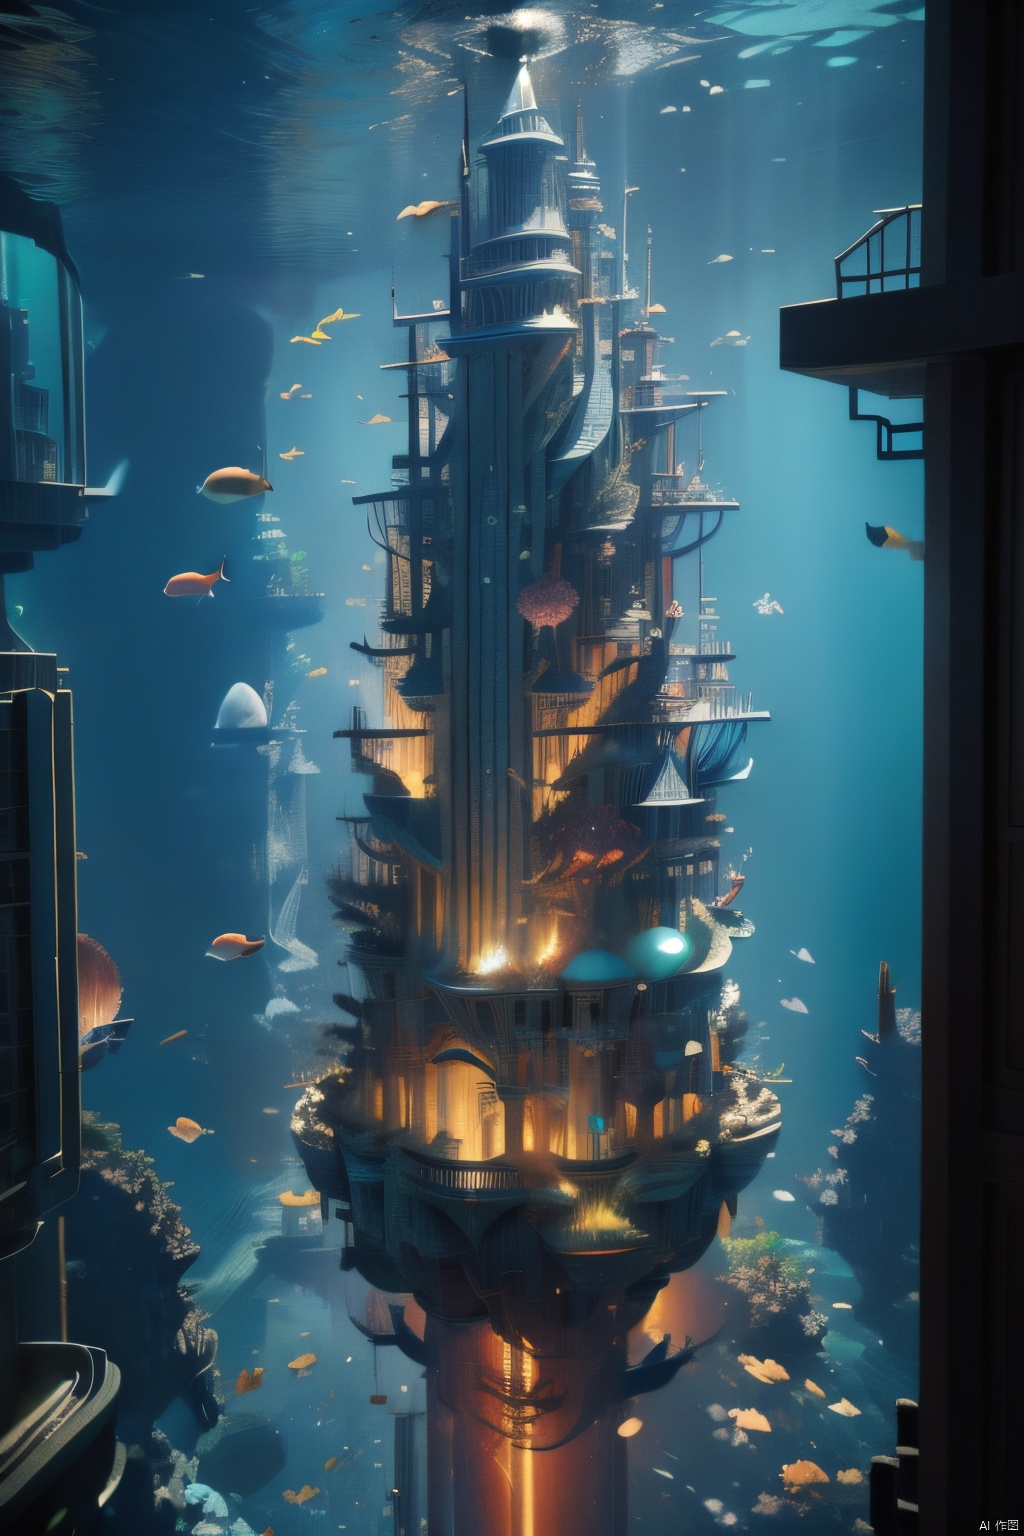 (under the sea:1.2),many fishes around the ocean,(cyberpunk),the city under the ocean,(masterpiece:1.2),magic ocean,scene,game,mysterious,hidden,fantastic,Atlantis,